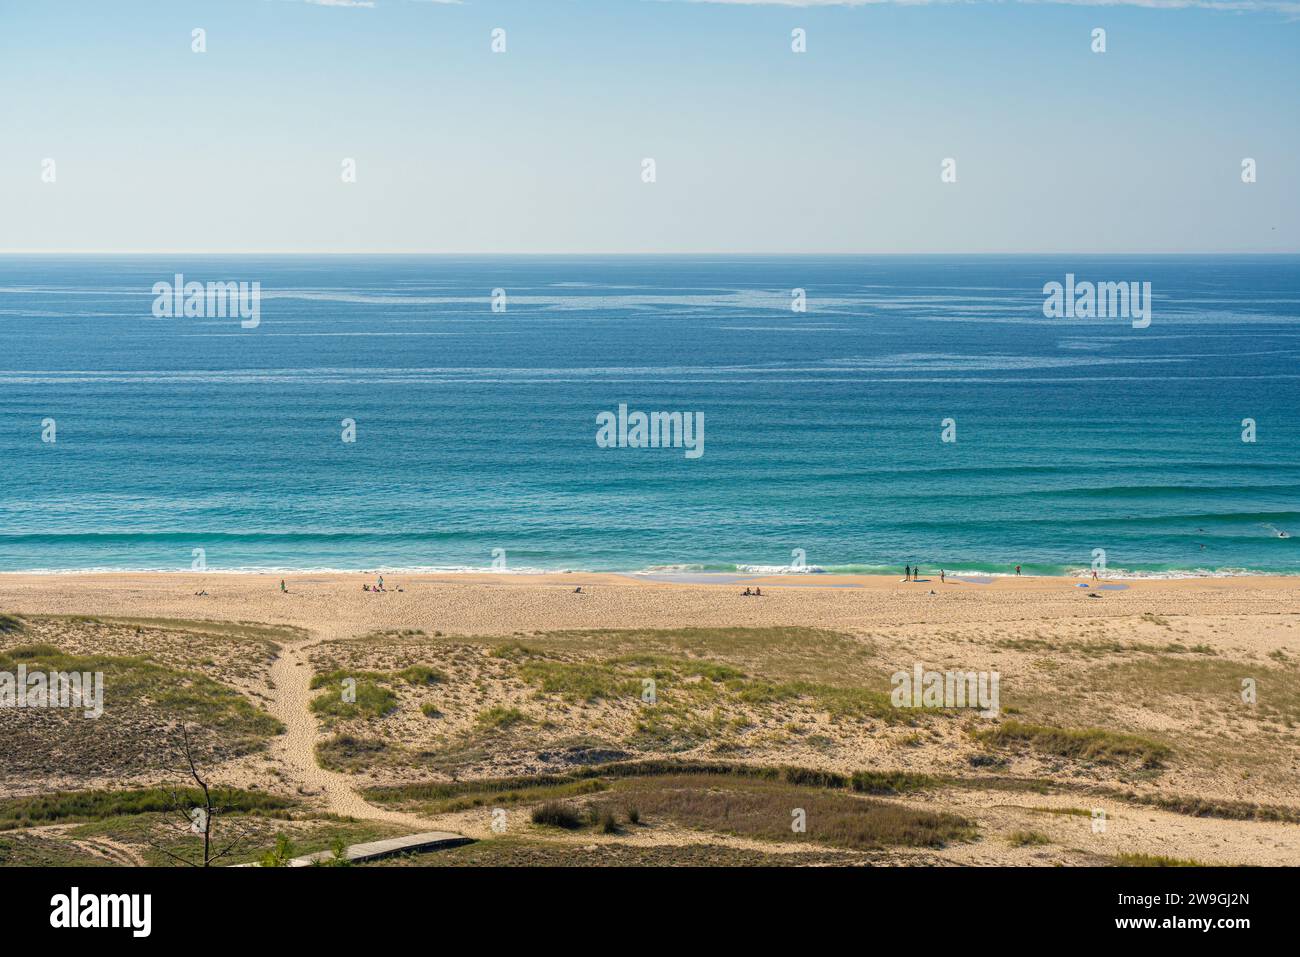 Vue panoramique de la plage de Doninos sur la côte de l'océan Atlantique, Ferrol, Galice, Espagne Banque D'Images